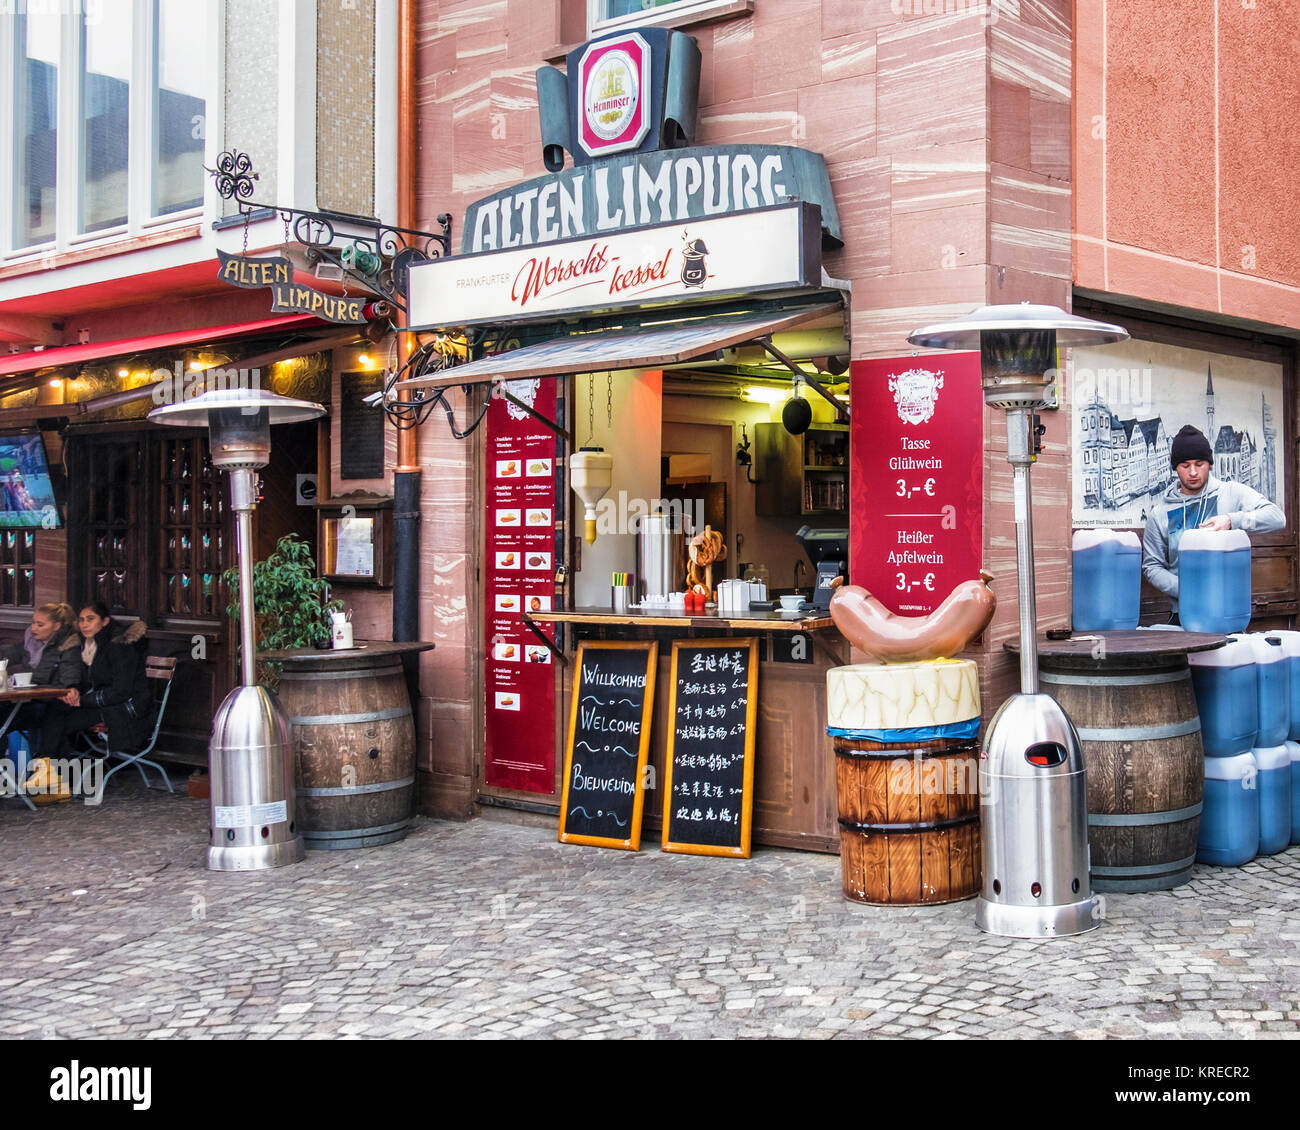 Frankfurt, Germany.Alten Limburg restaurant, bar & cafe serves Traditional German Food,Sausages,Gluhwein,ApfelWein Stock Photo